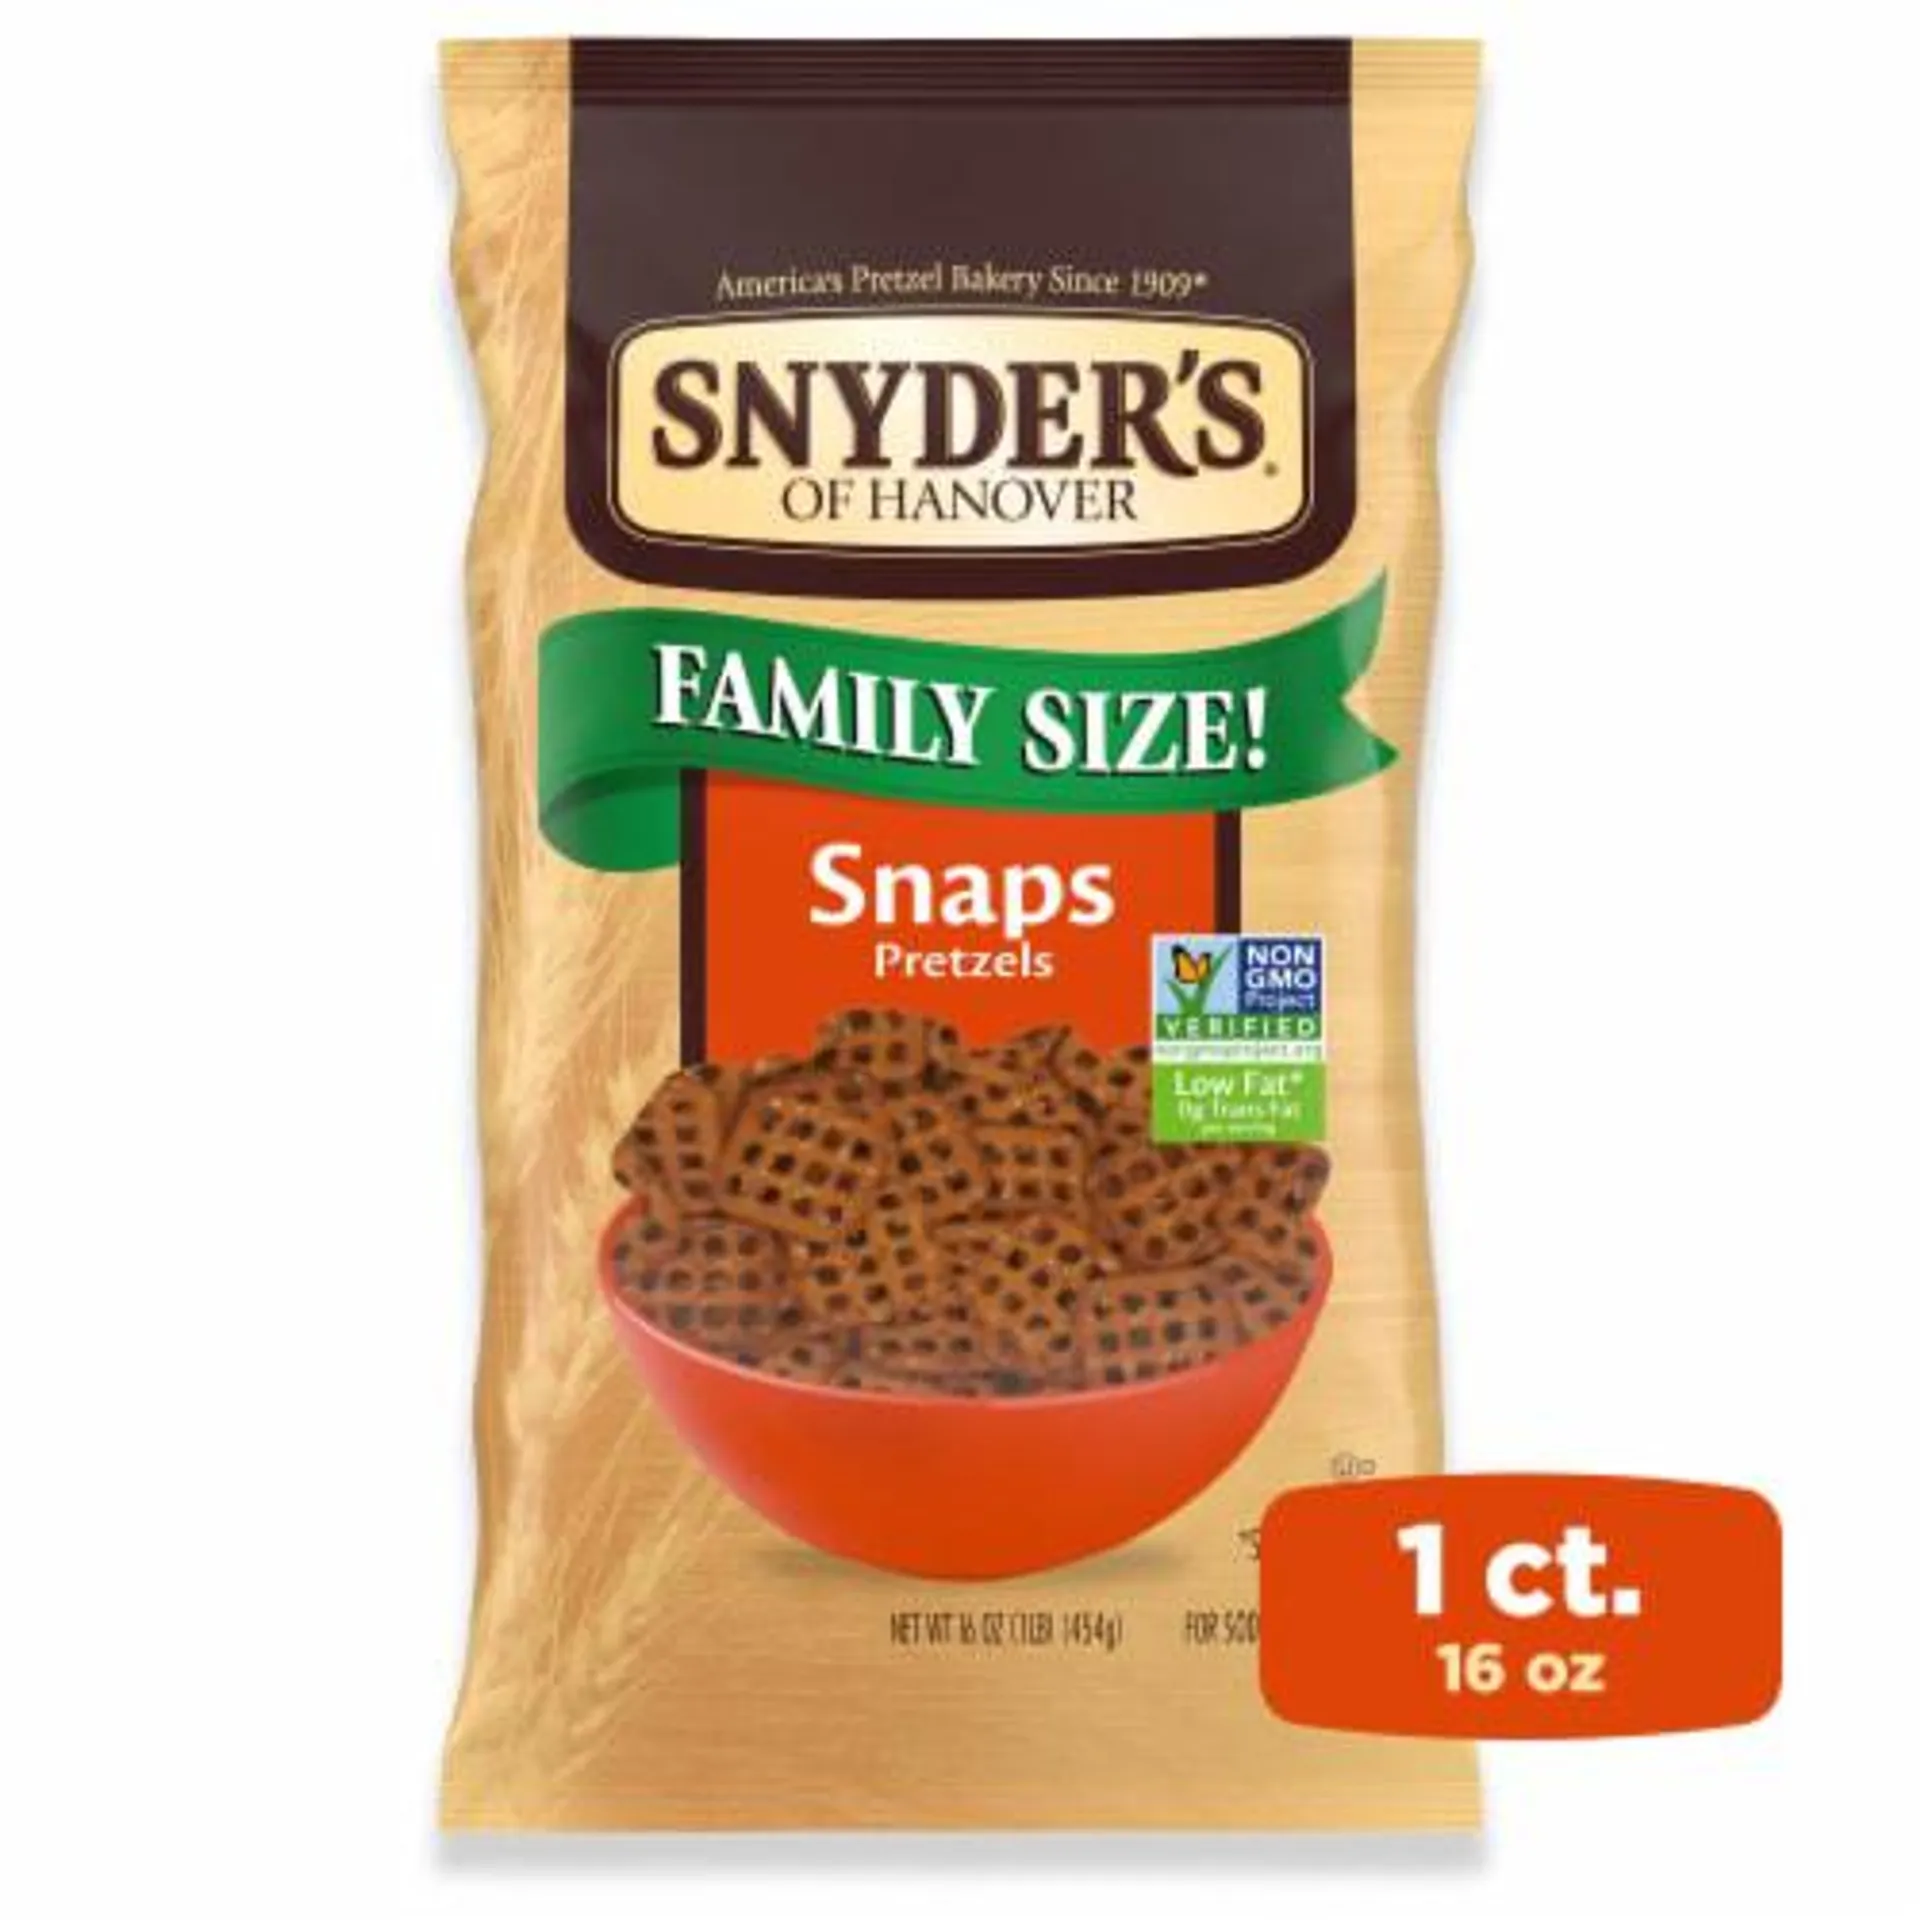 Snyder's® of Hanover Pretzel Snaps Family Size